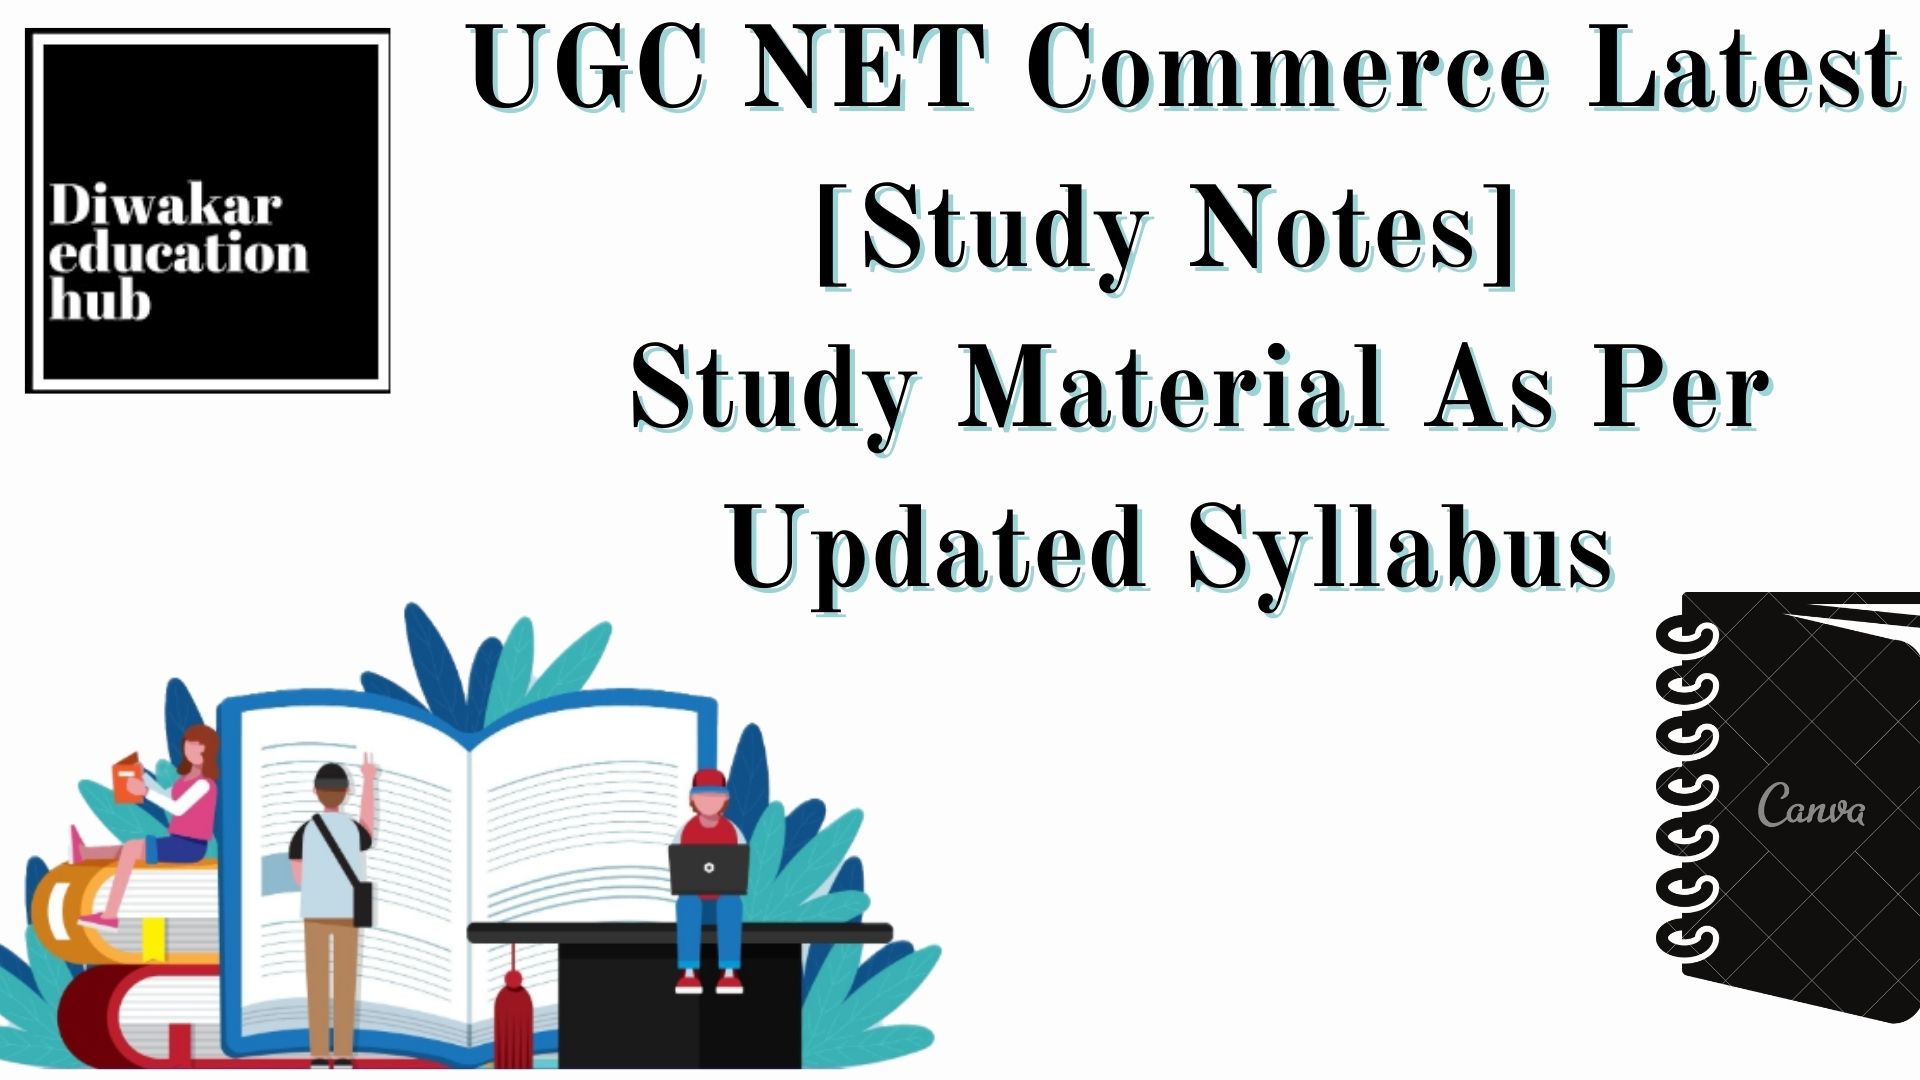 UGC NET Commerce Latest Study Notes